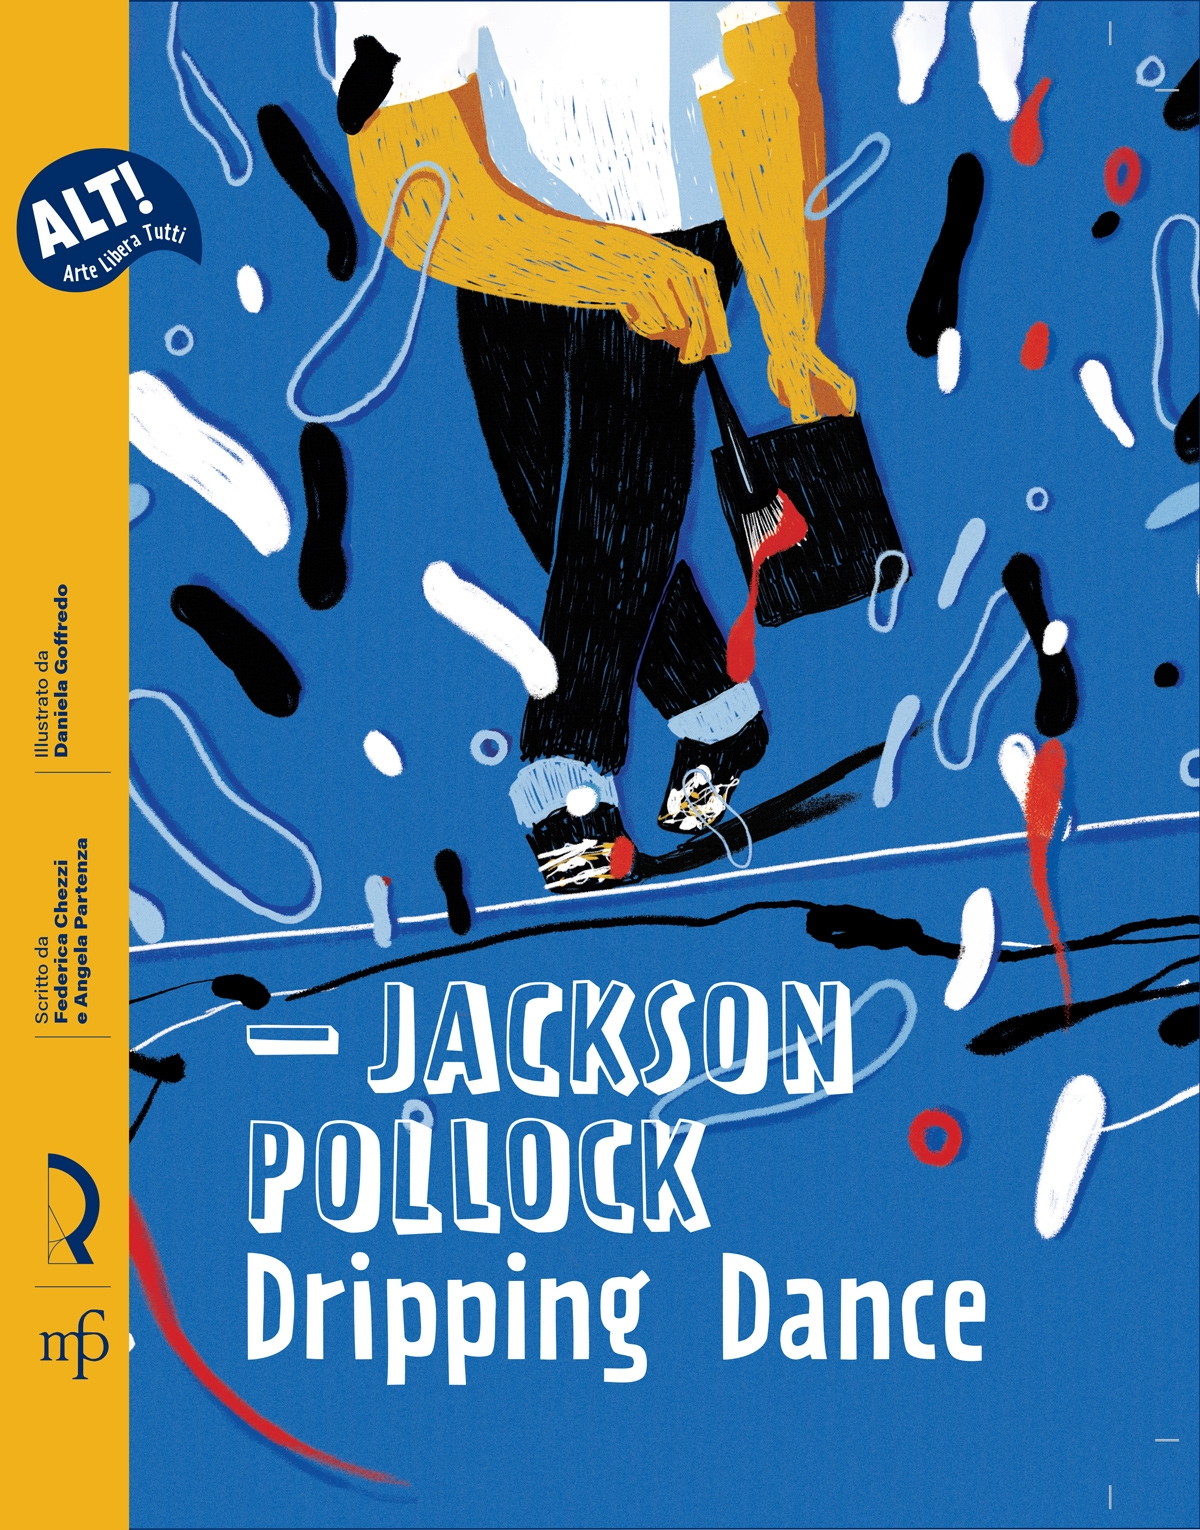 Jackson Pollock dripping dance 